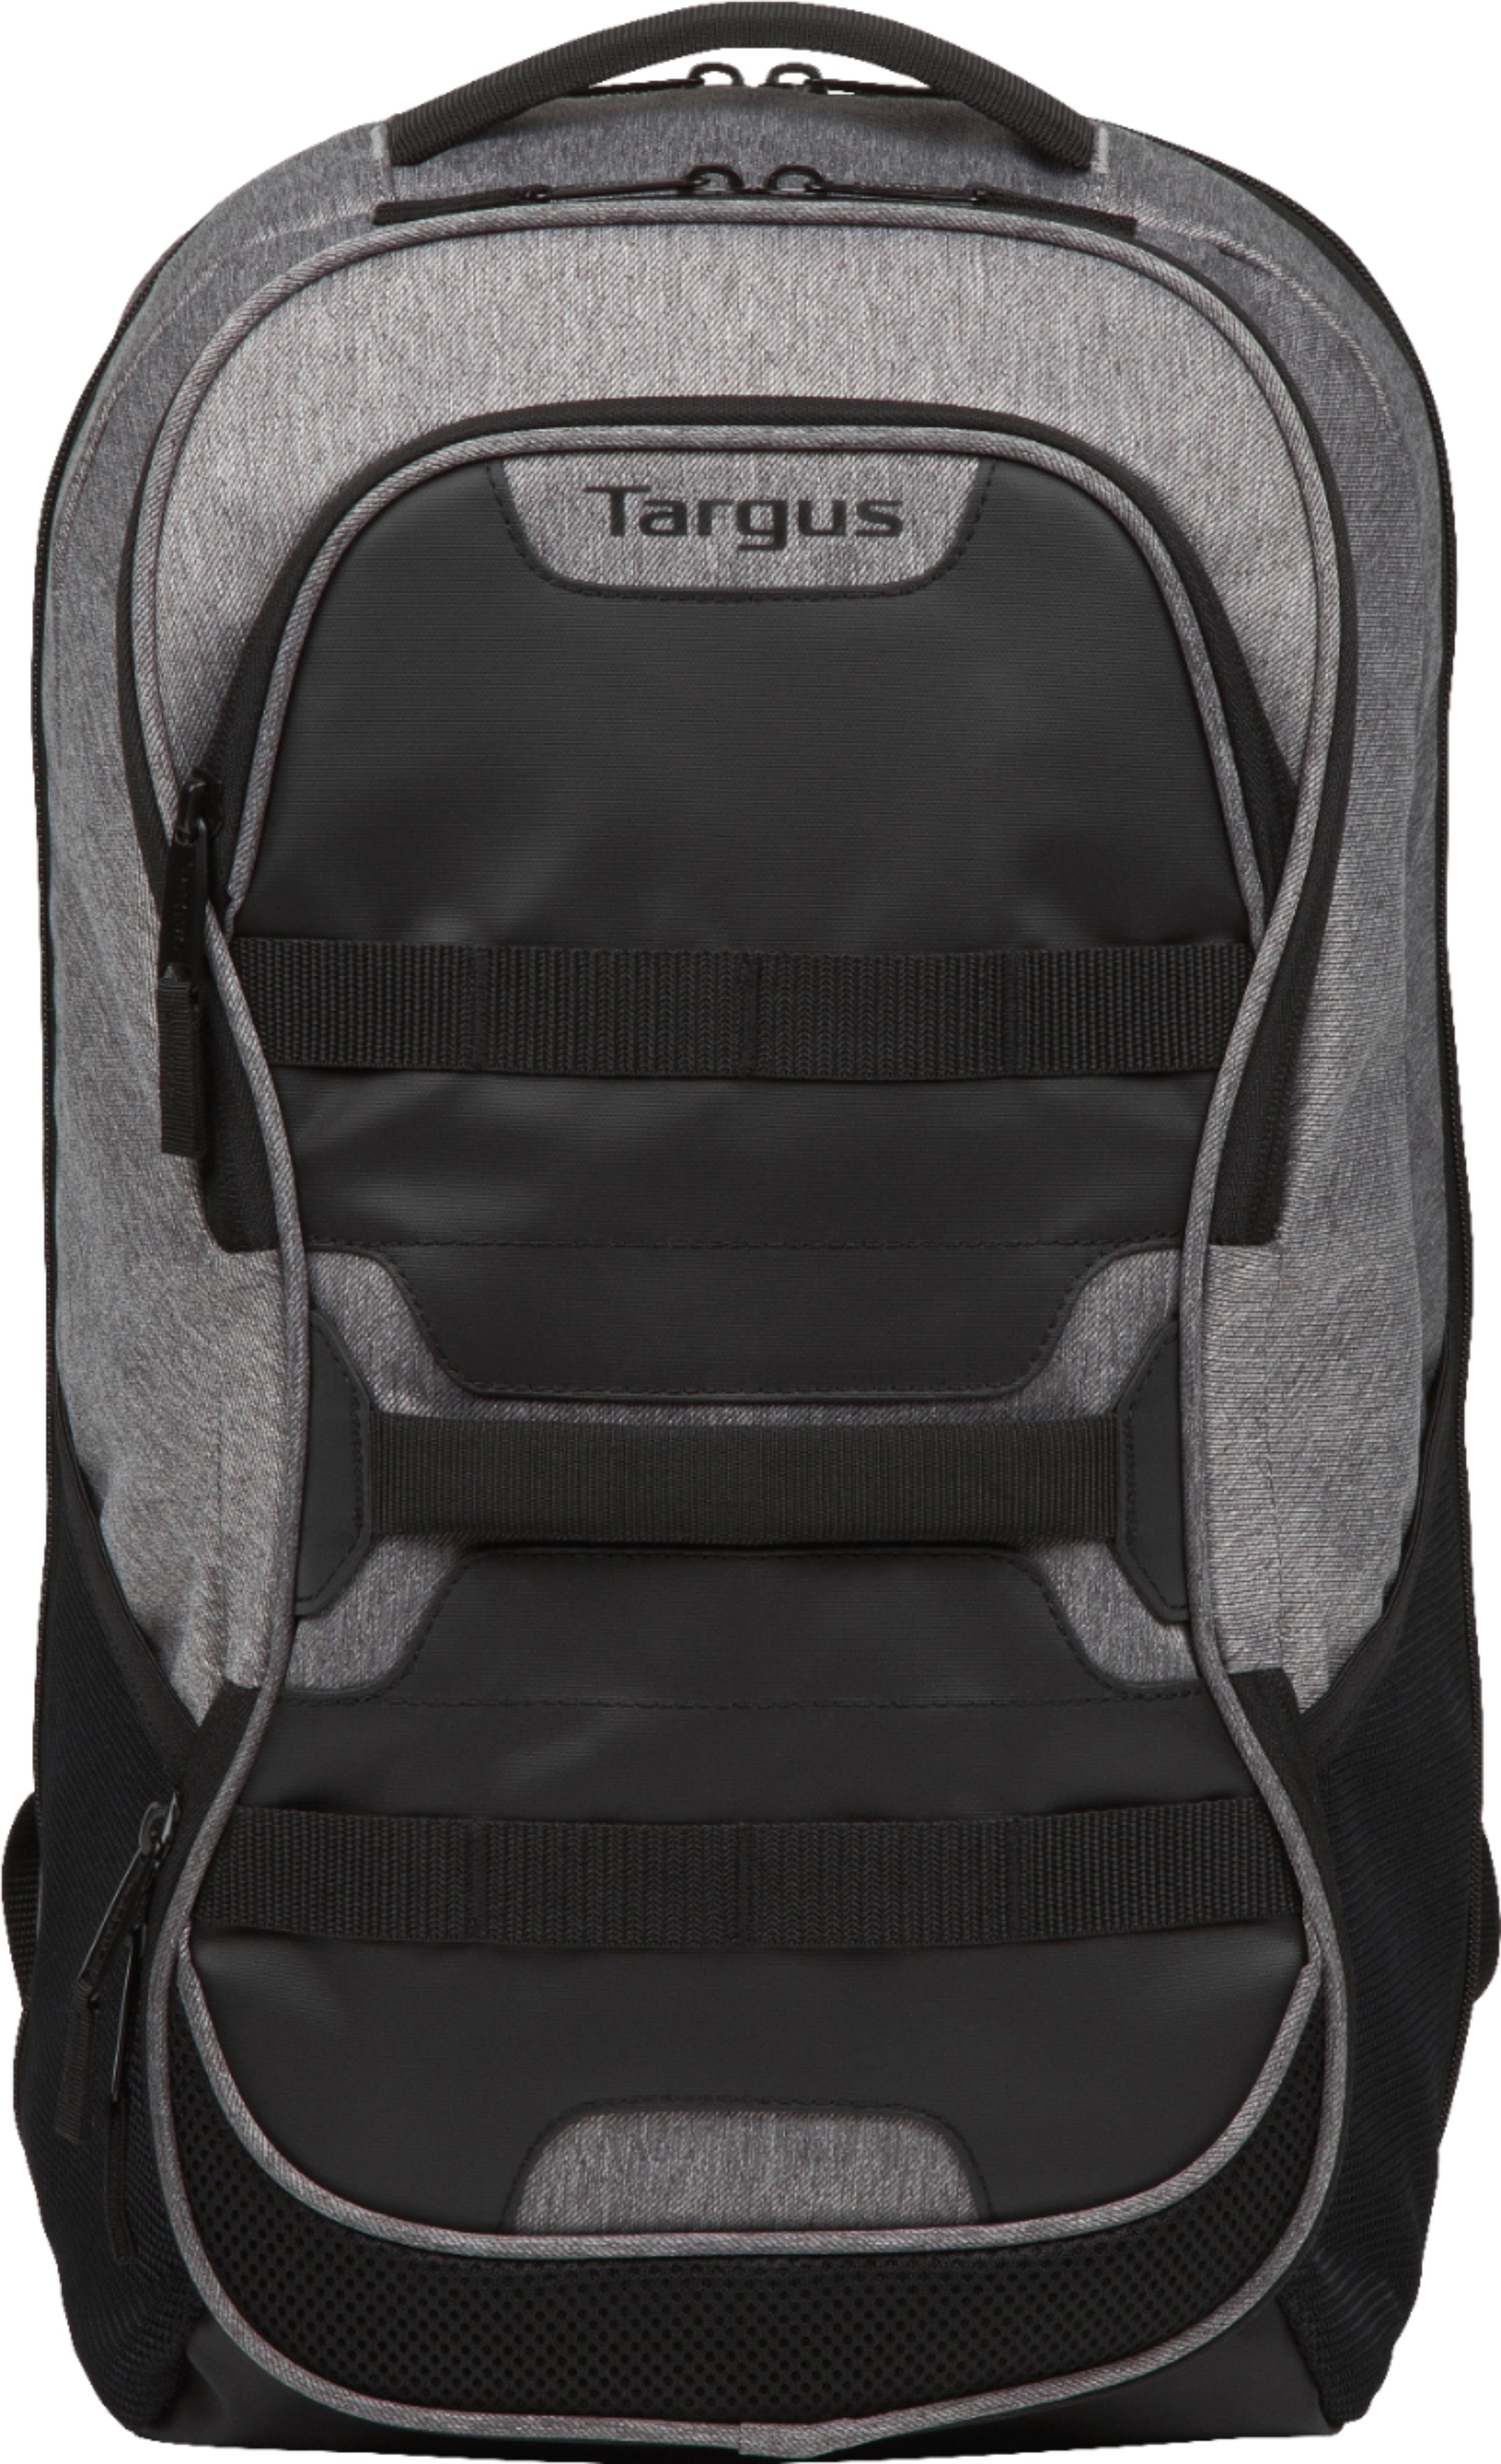 Targus - Work + Play Laptop Backpack - Gray - .99